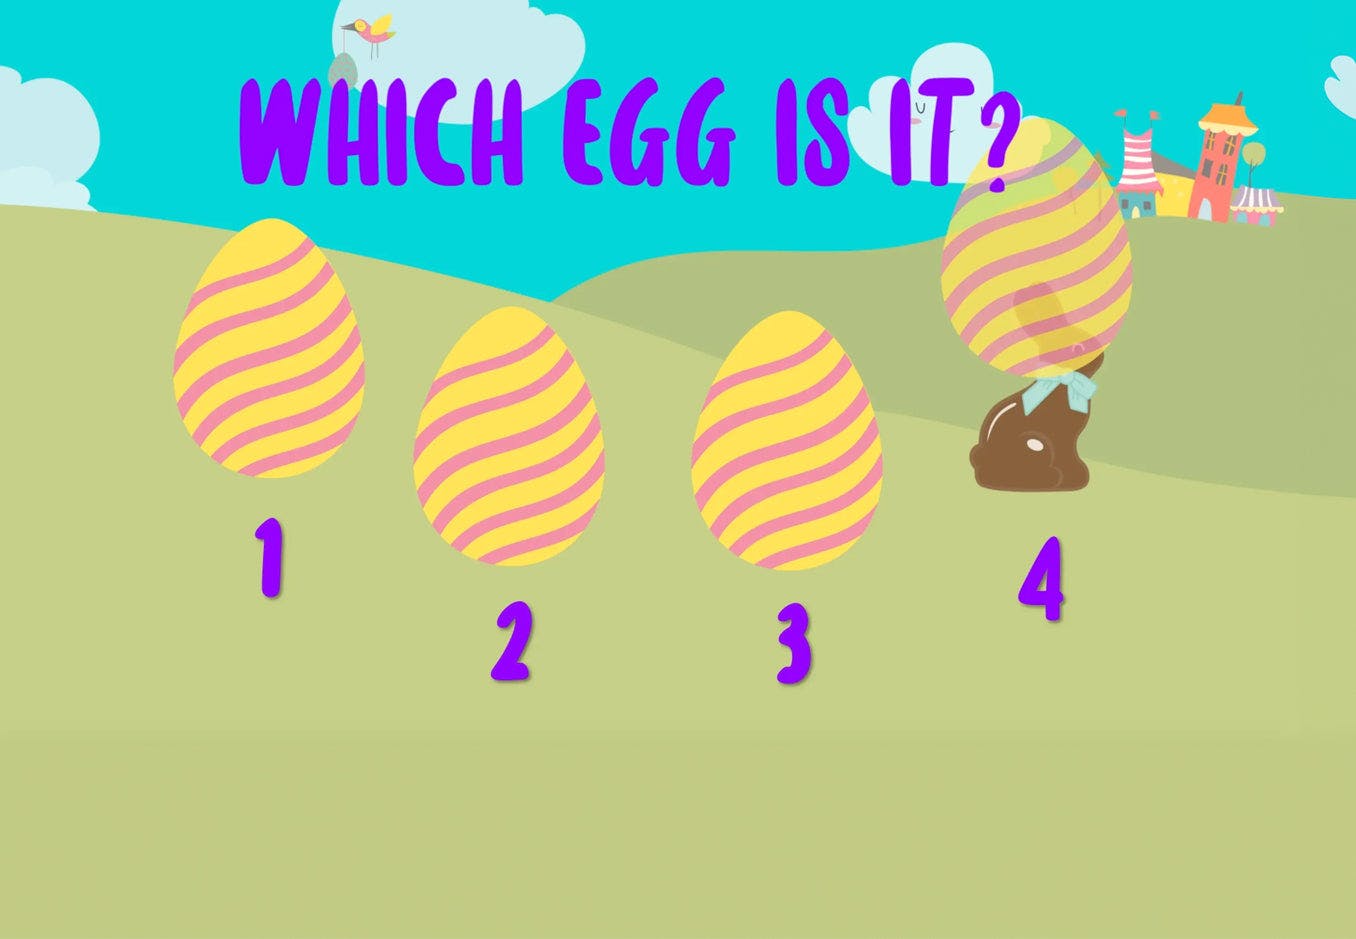 Easter Egg Shuffle Game Video for Kids Church